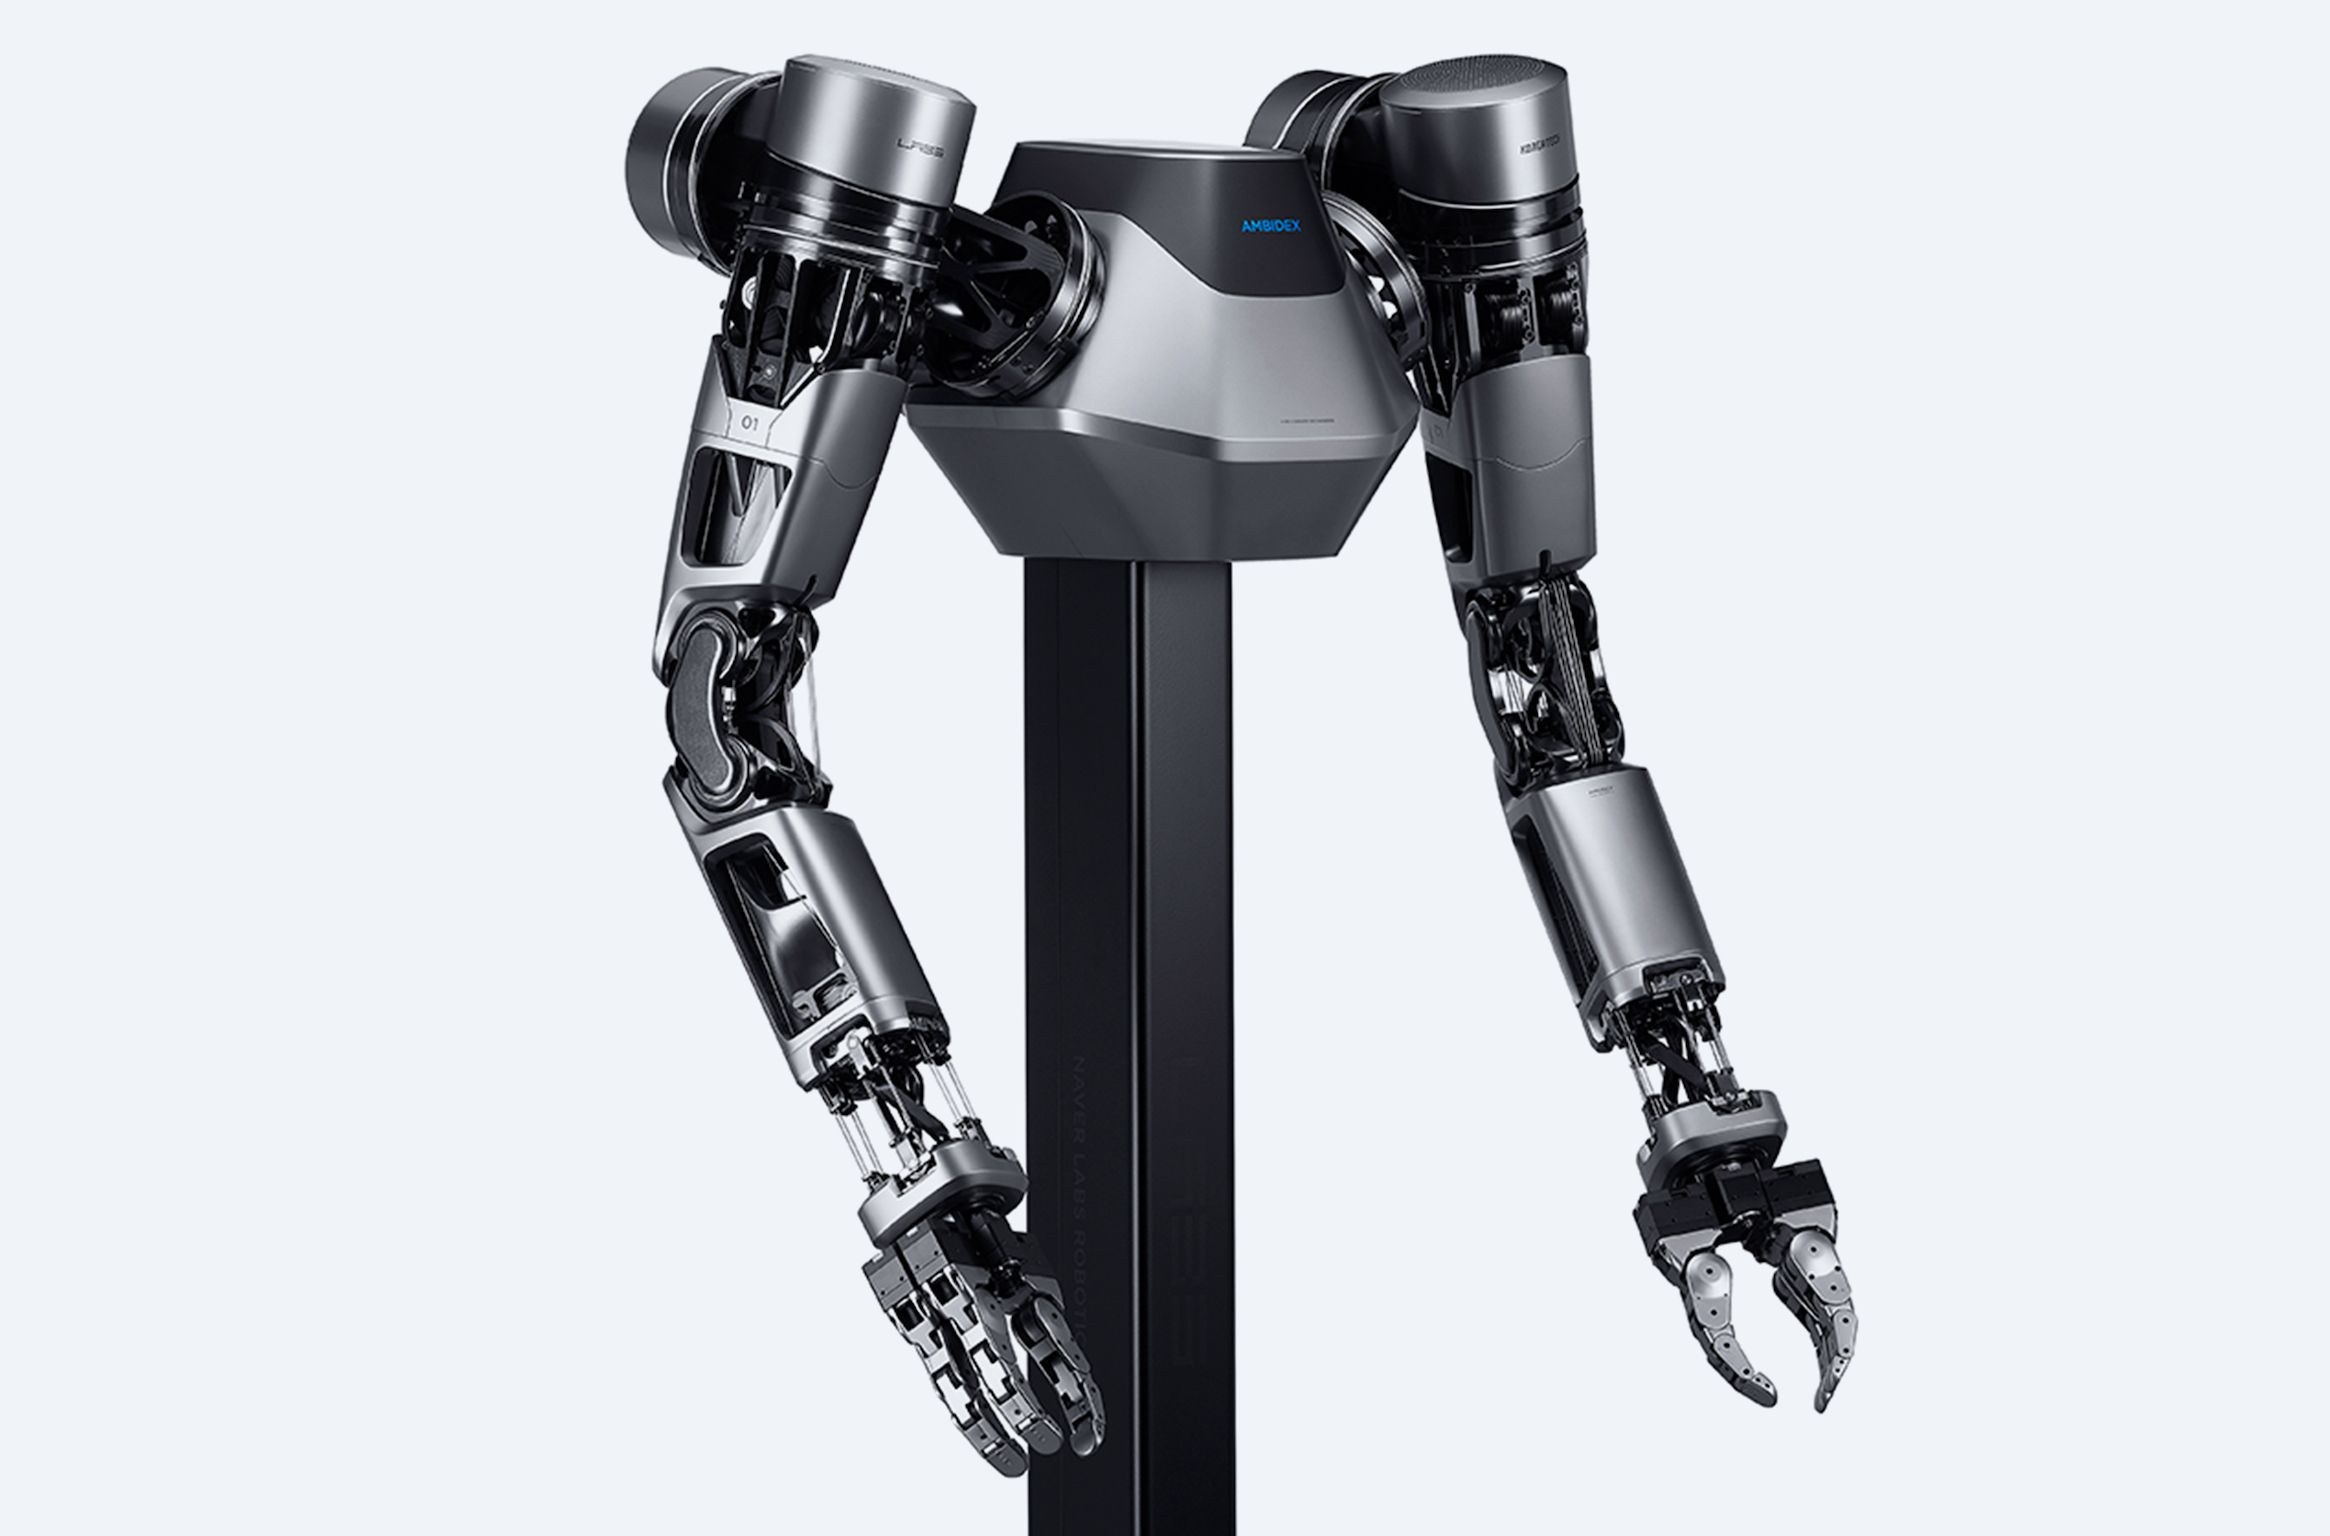 Honor r2 rob 00. Робот xm1219 Armed Robotic vehicle. Waveshare робот Пимнара металлический робот. Роборука манипулятор. Рука робота.